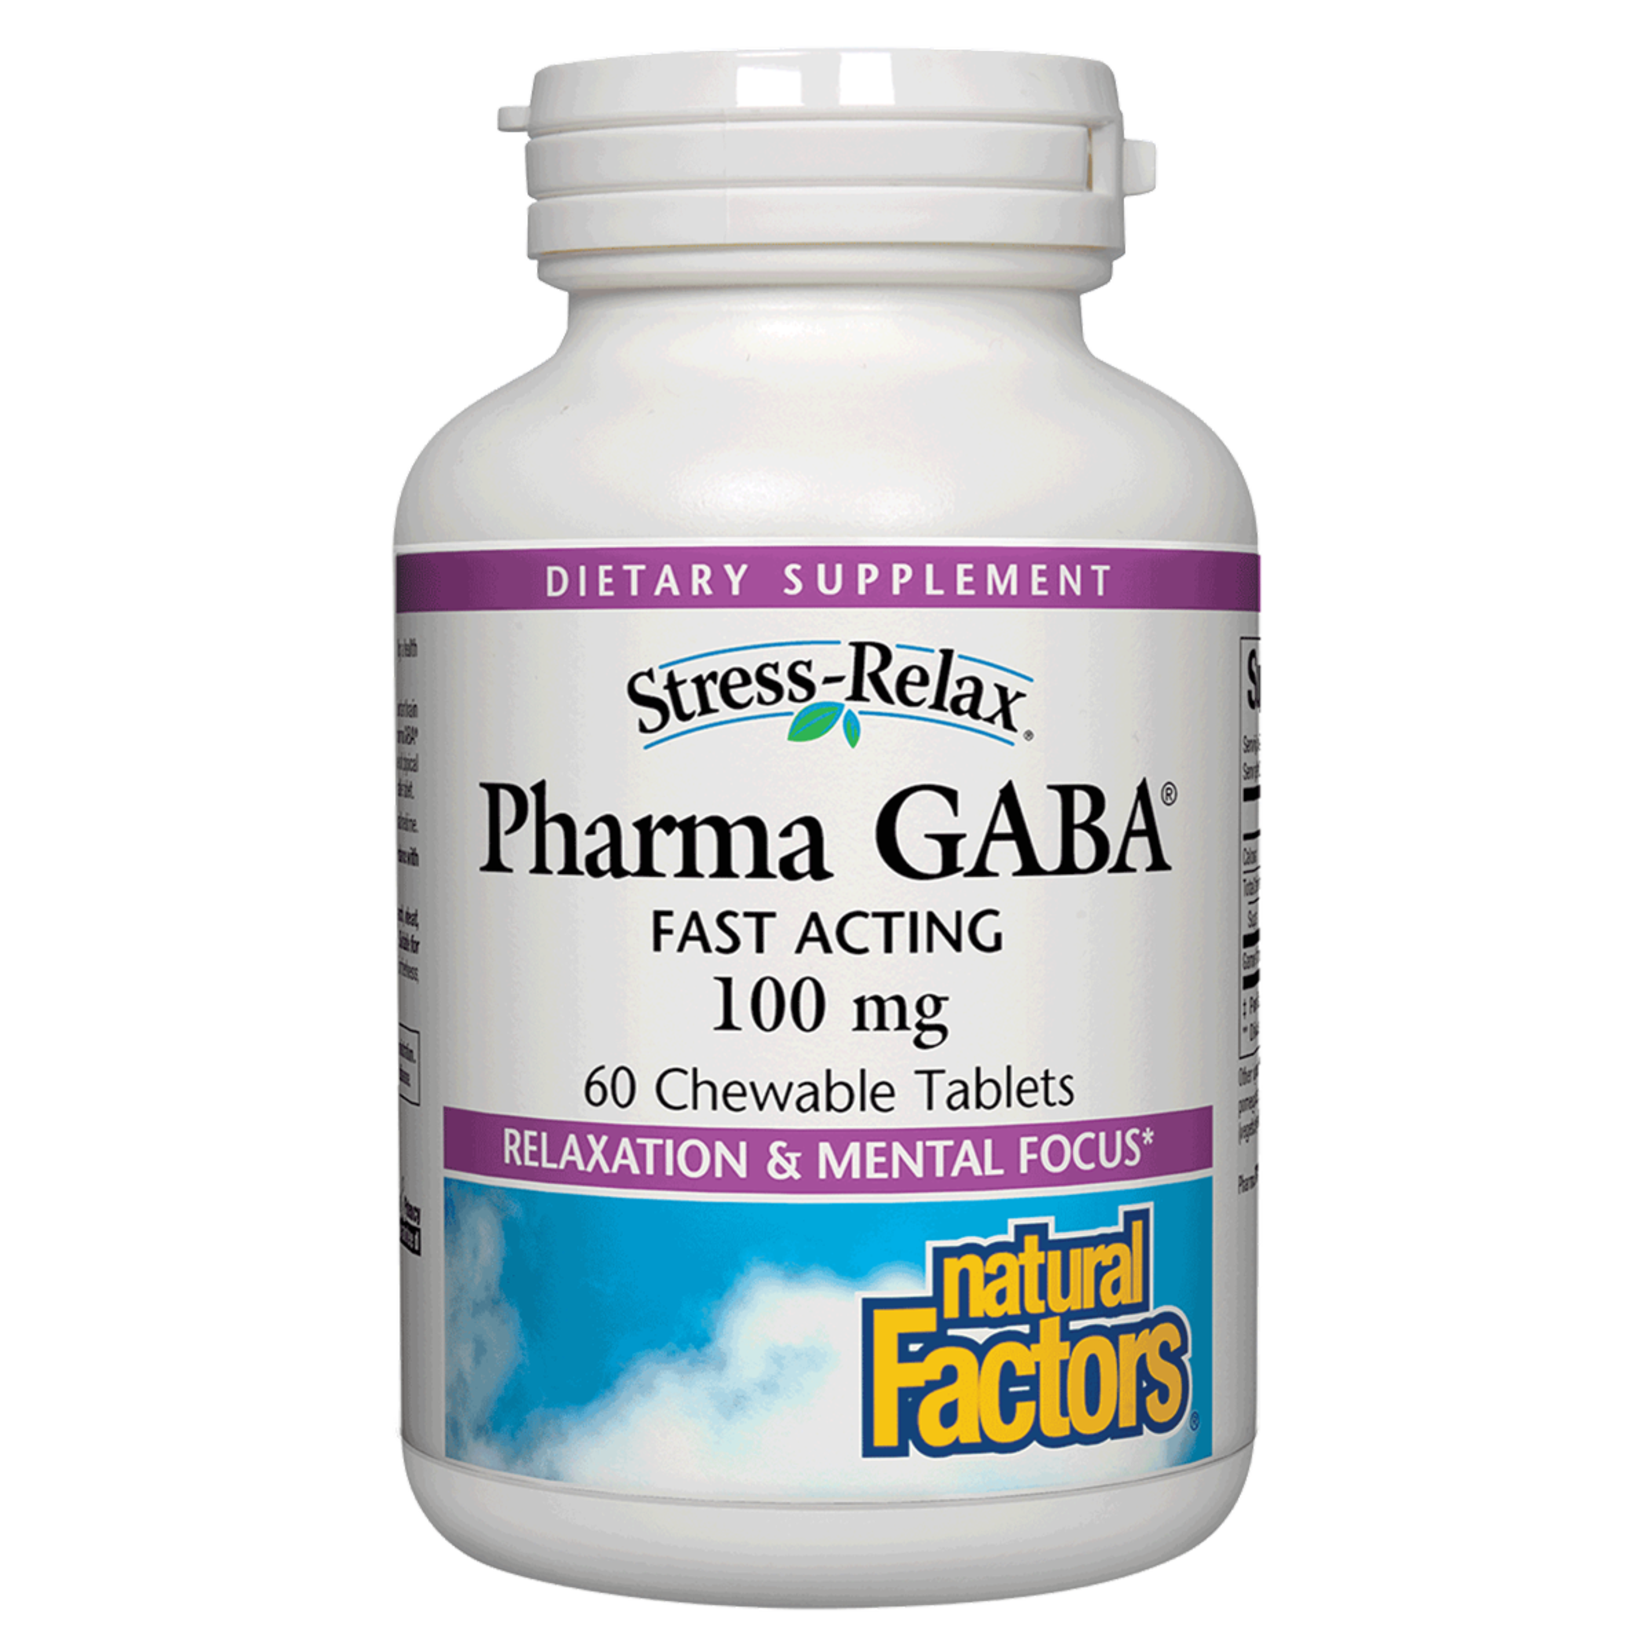 Natural Factors Natural Factors - Stress-Relax Pharma Gaba Chewable - 60 Tablets